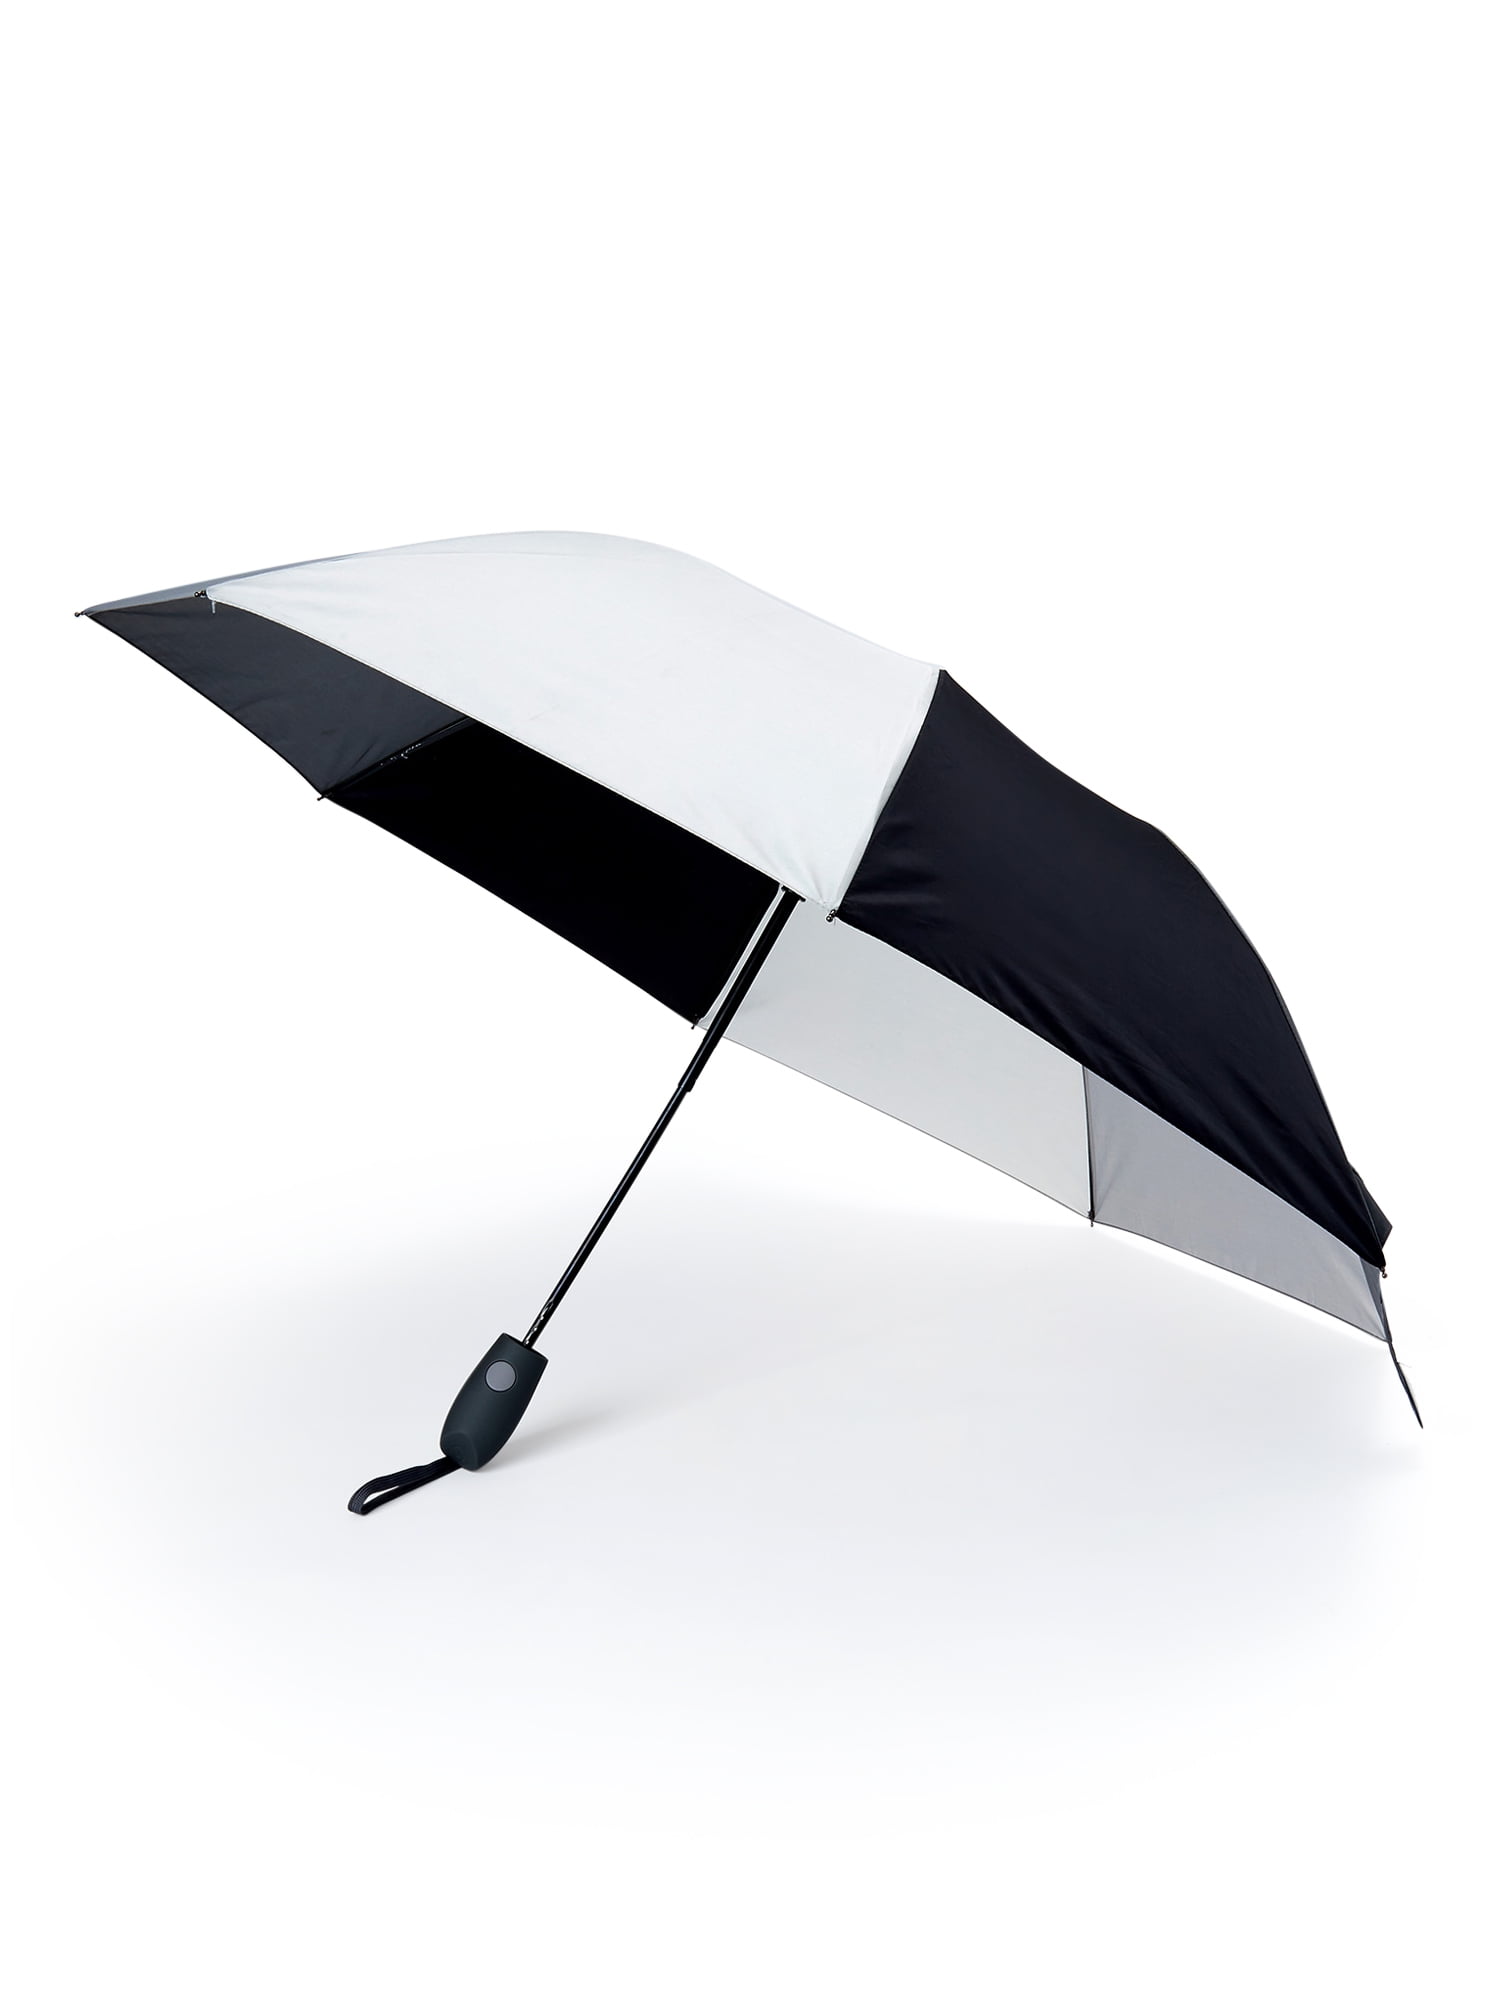 Misty Harbor Automatic Open Folding Umbrella, Grey and White